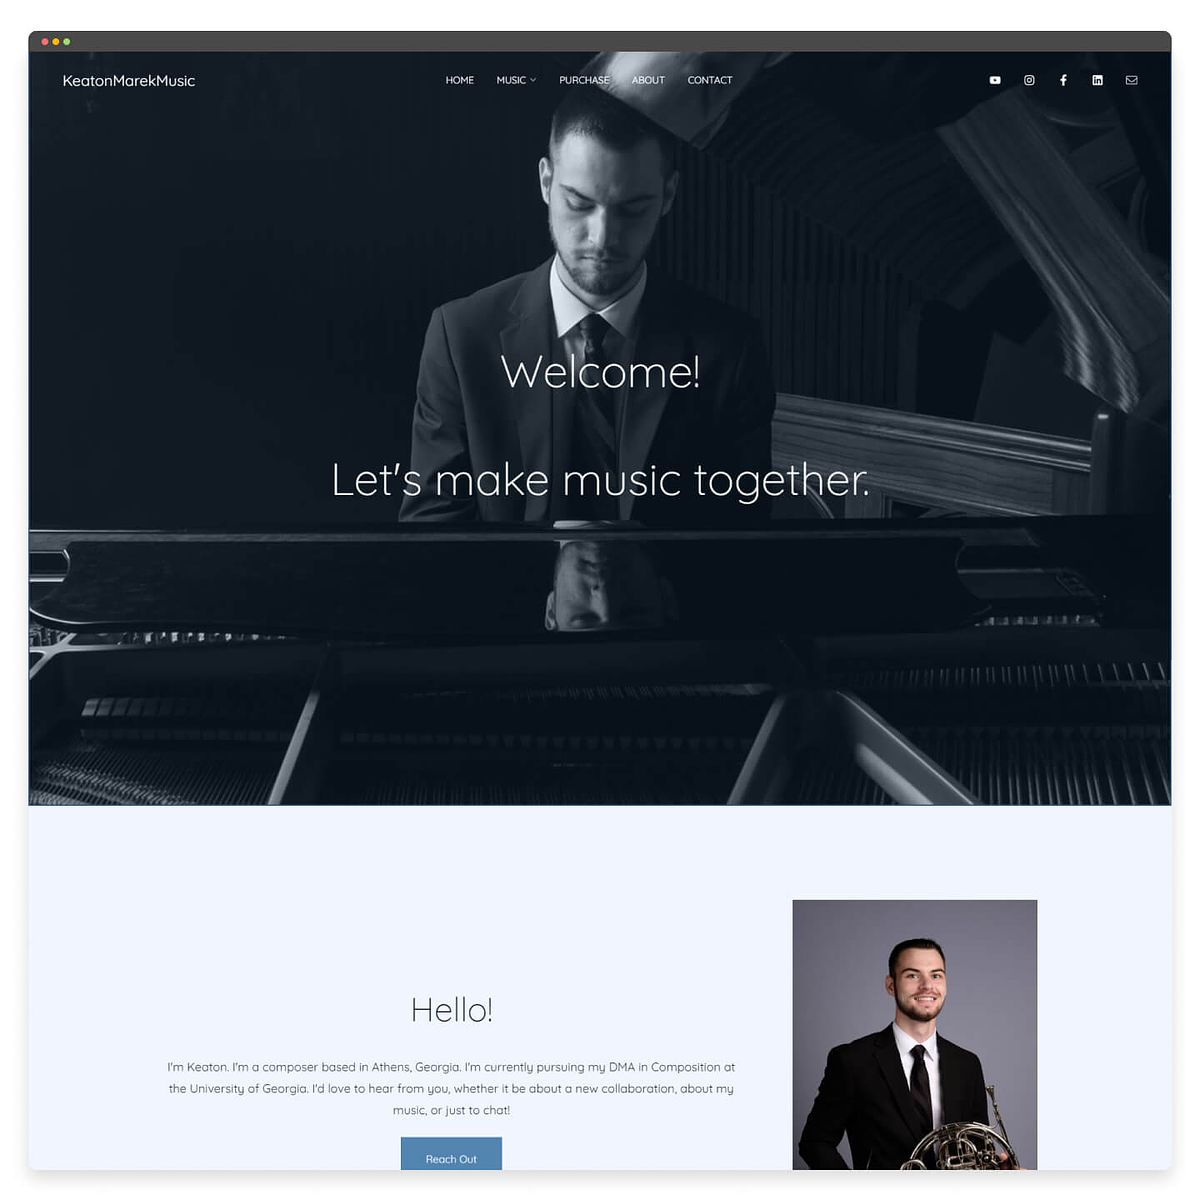 Muzikant websiteontwerp